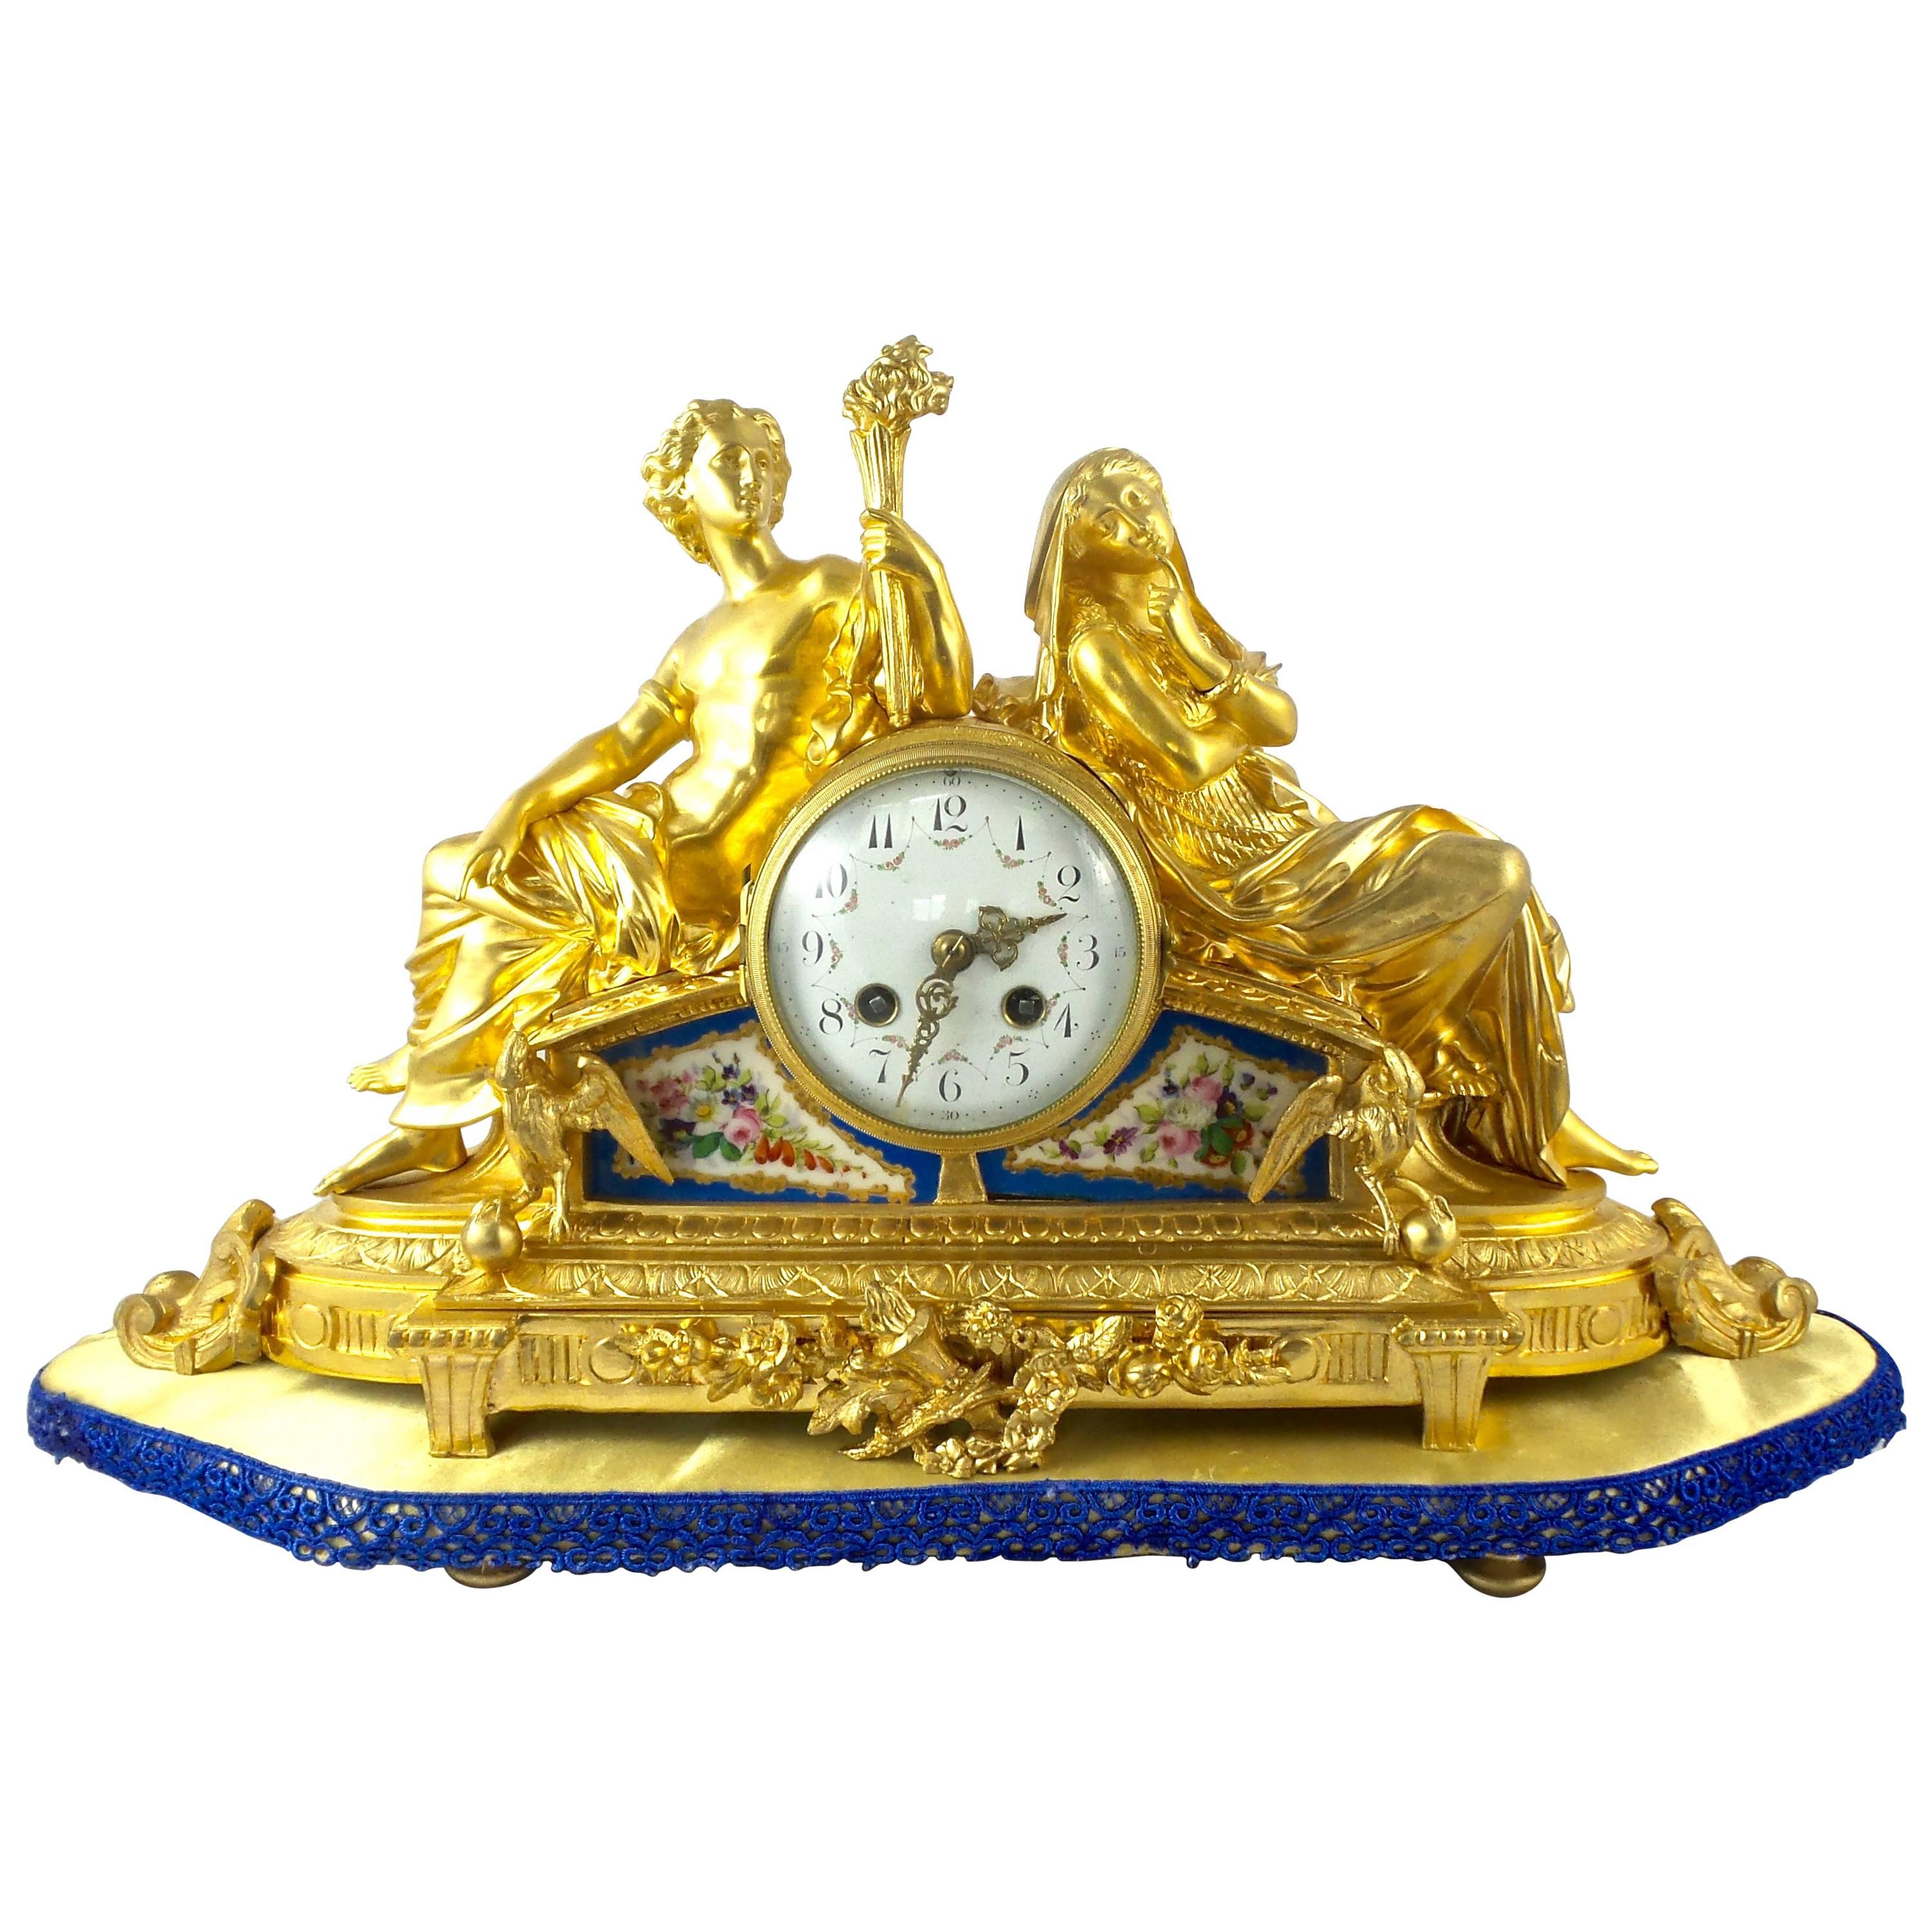 19th Century French Mantel Clock Gilt Ormolu Bronze and Blue Sevres Porcelain